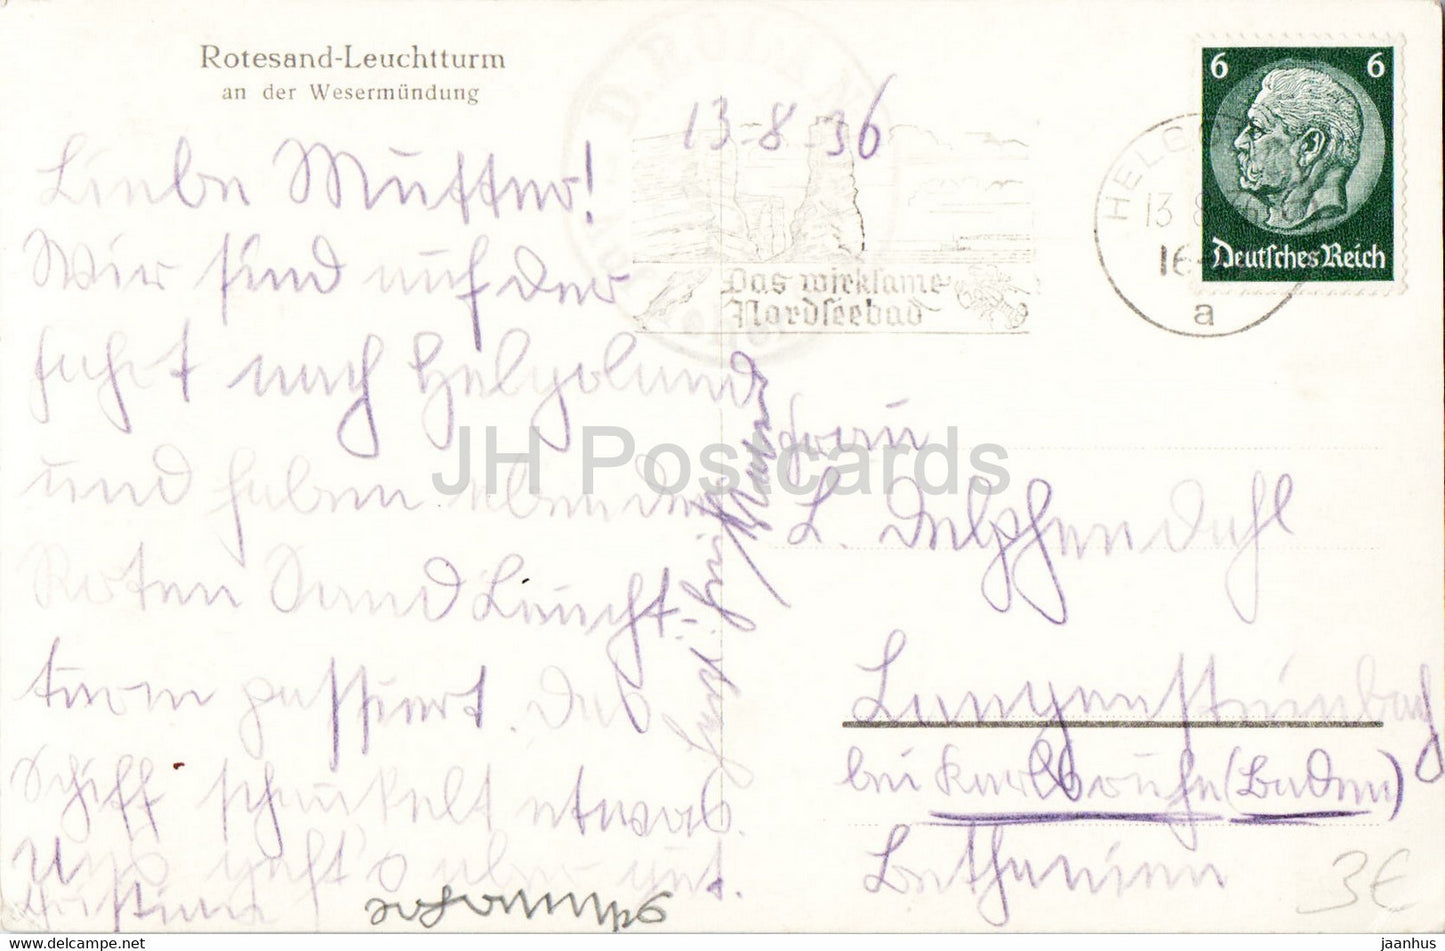 Rotesand Leuchtturm an der Wesermundung - phare - carte postale ancienne - 1936 - Allemagne - utilisé